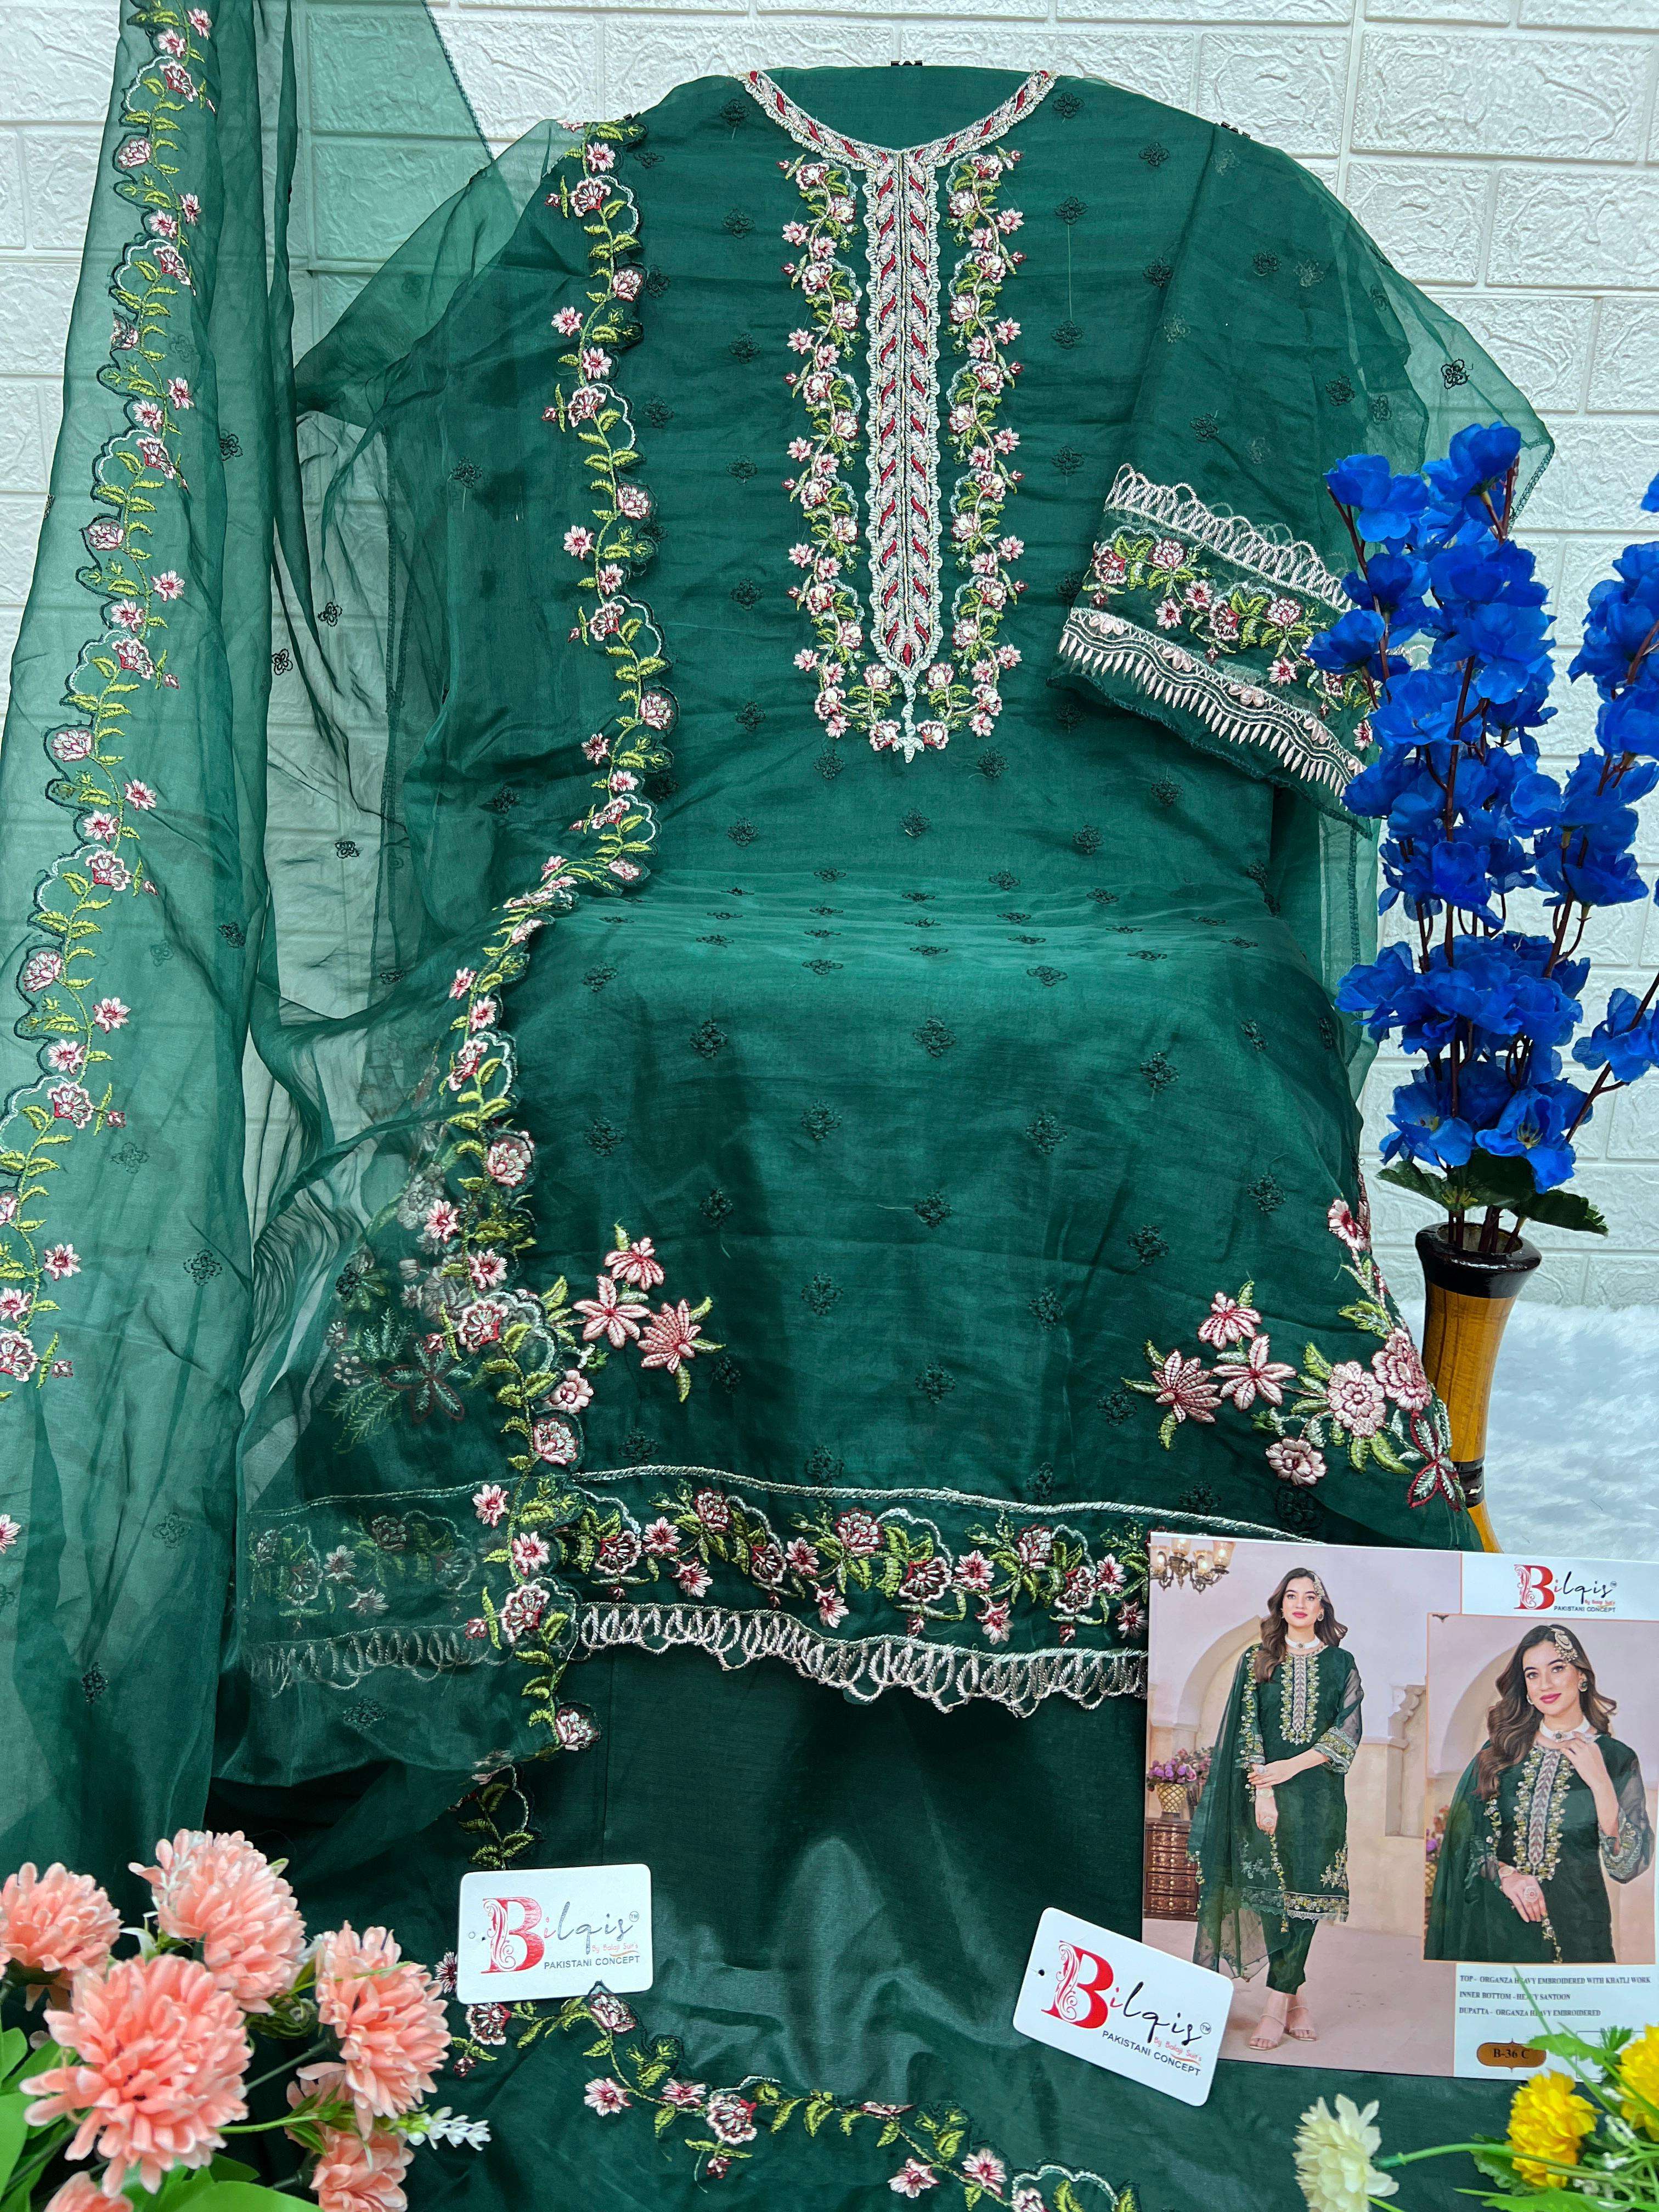 bilqistm D NO  B 36 A TO D organza decent embroidery look salwar suit single